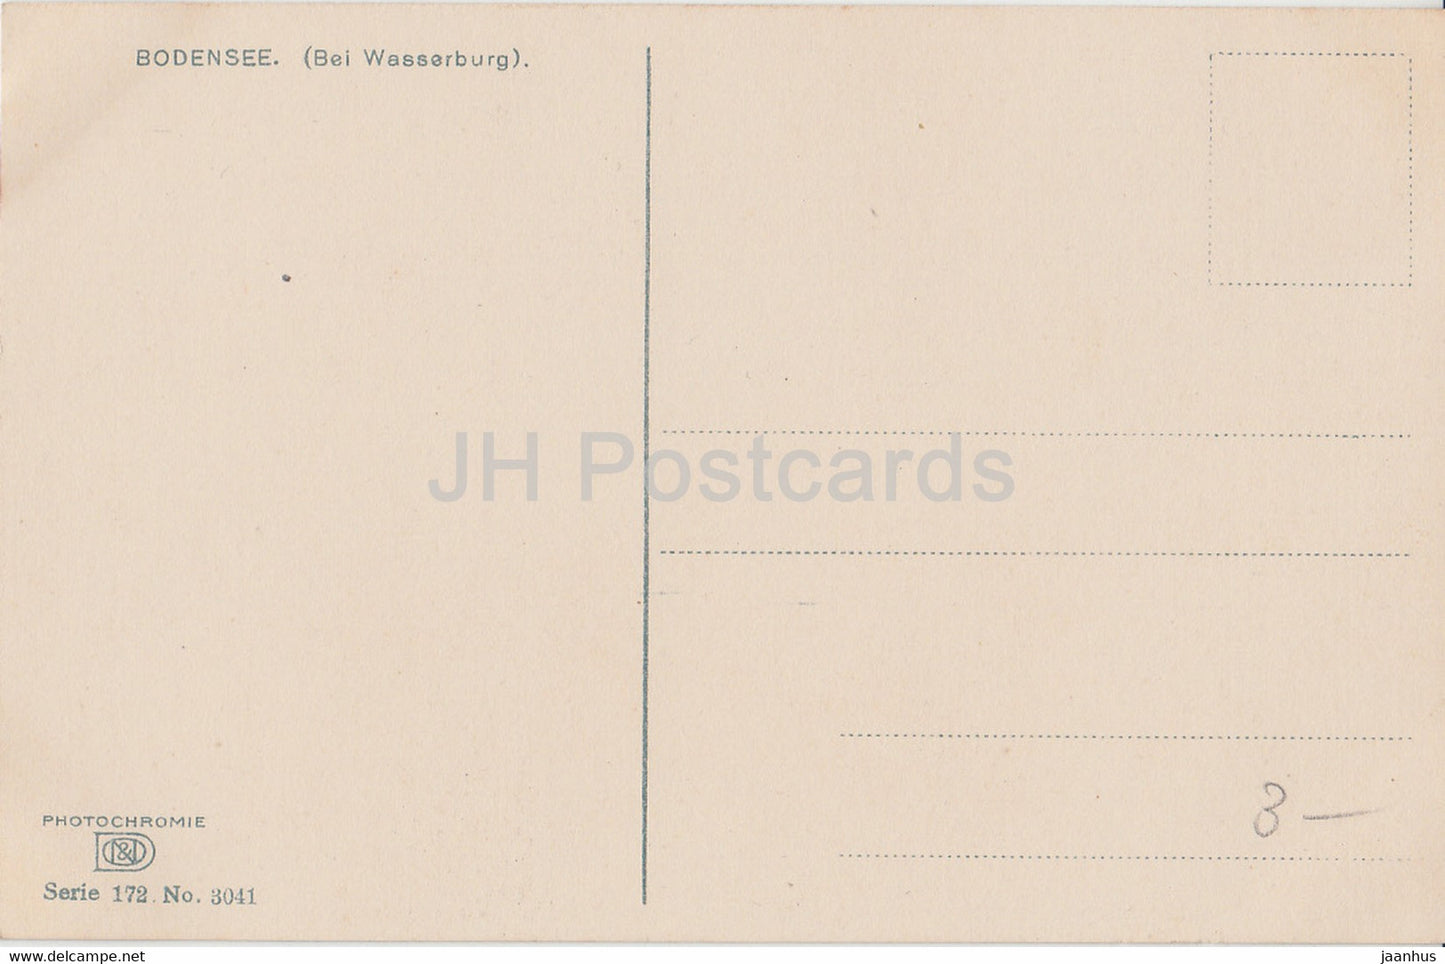 Bodensee bei Wasserburg - bateau - Photochromie 3041 - Série 172 - carte postale ancienne - Allemagne - inutilisée